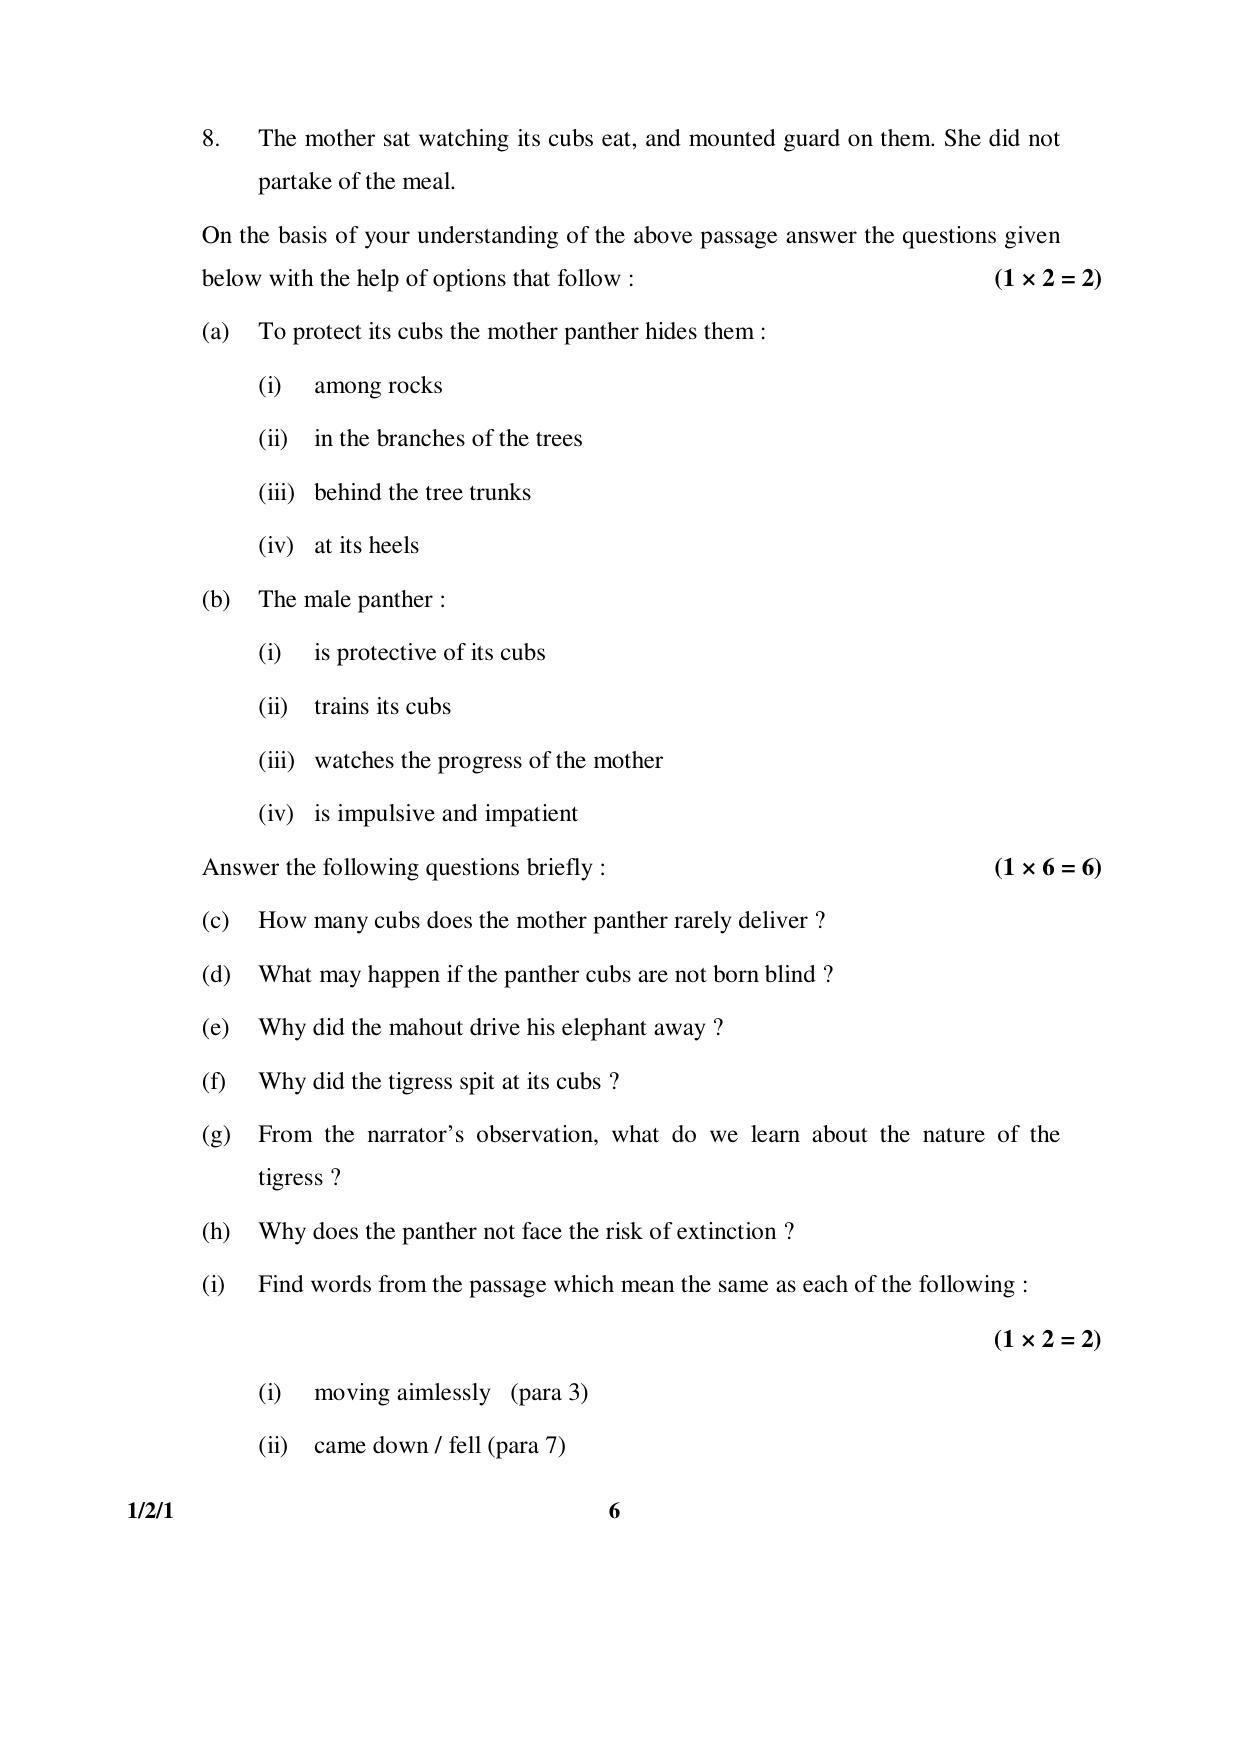 CBSE Class 12 1-2-1 ENGLISH CORE 2016 Question Paper - Page 6